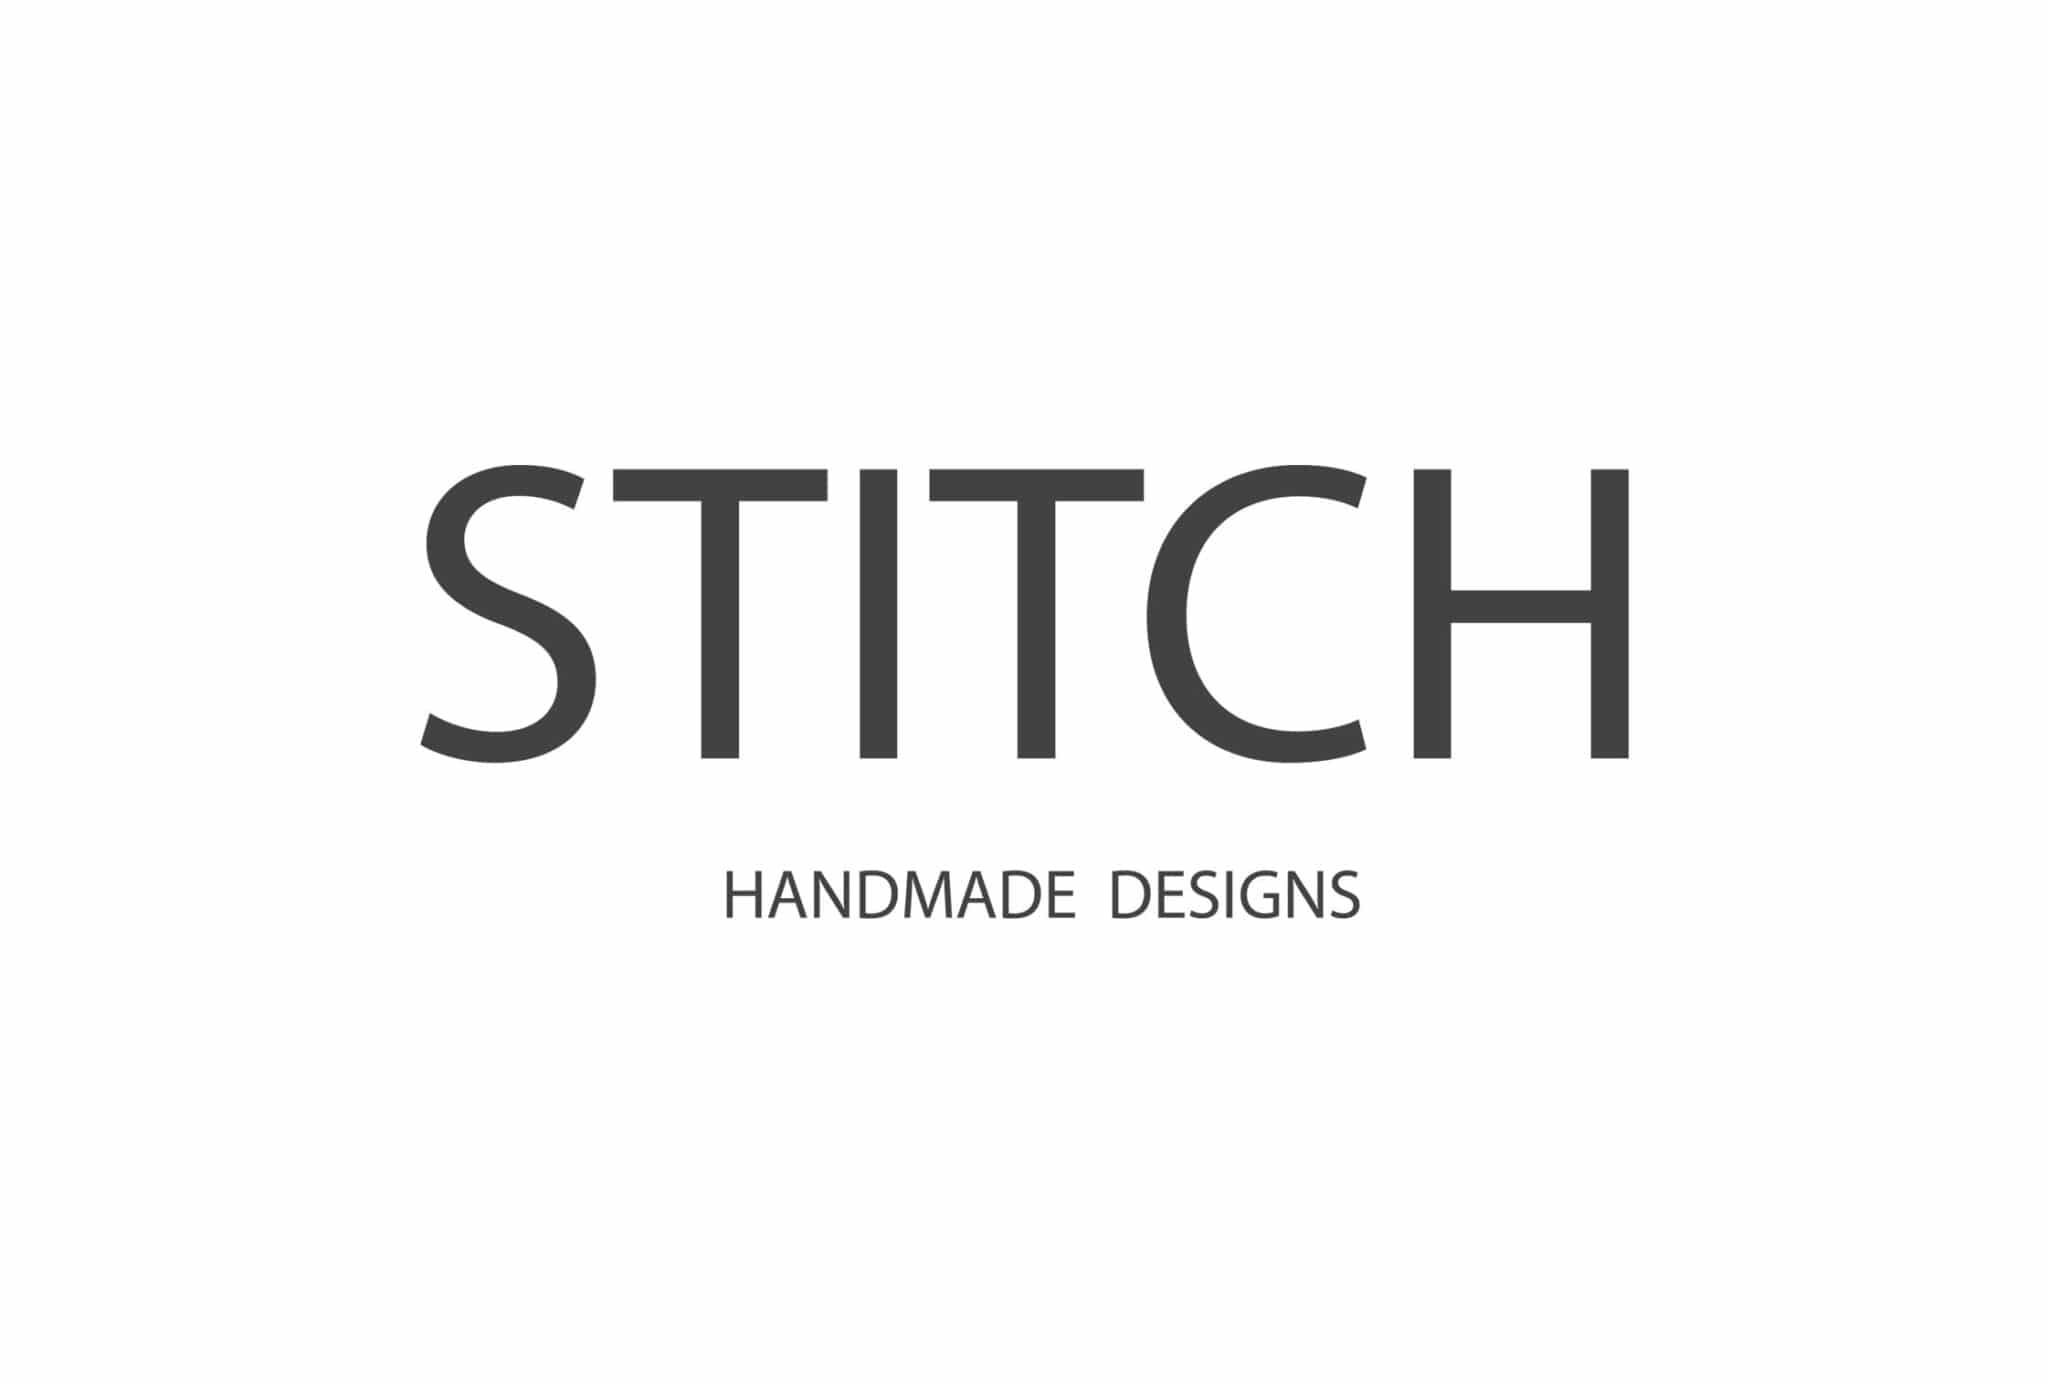 Stitch handmade designs – I Make This